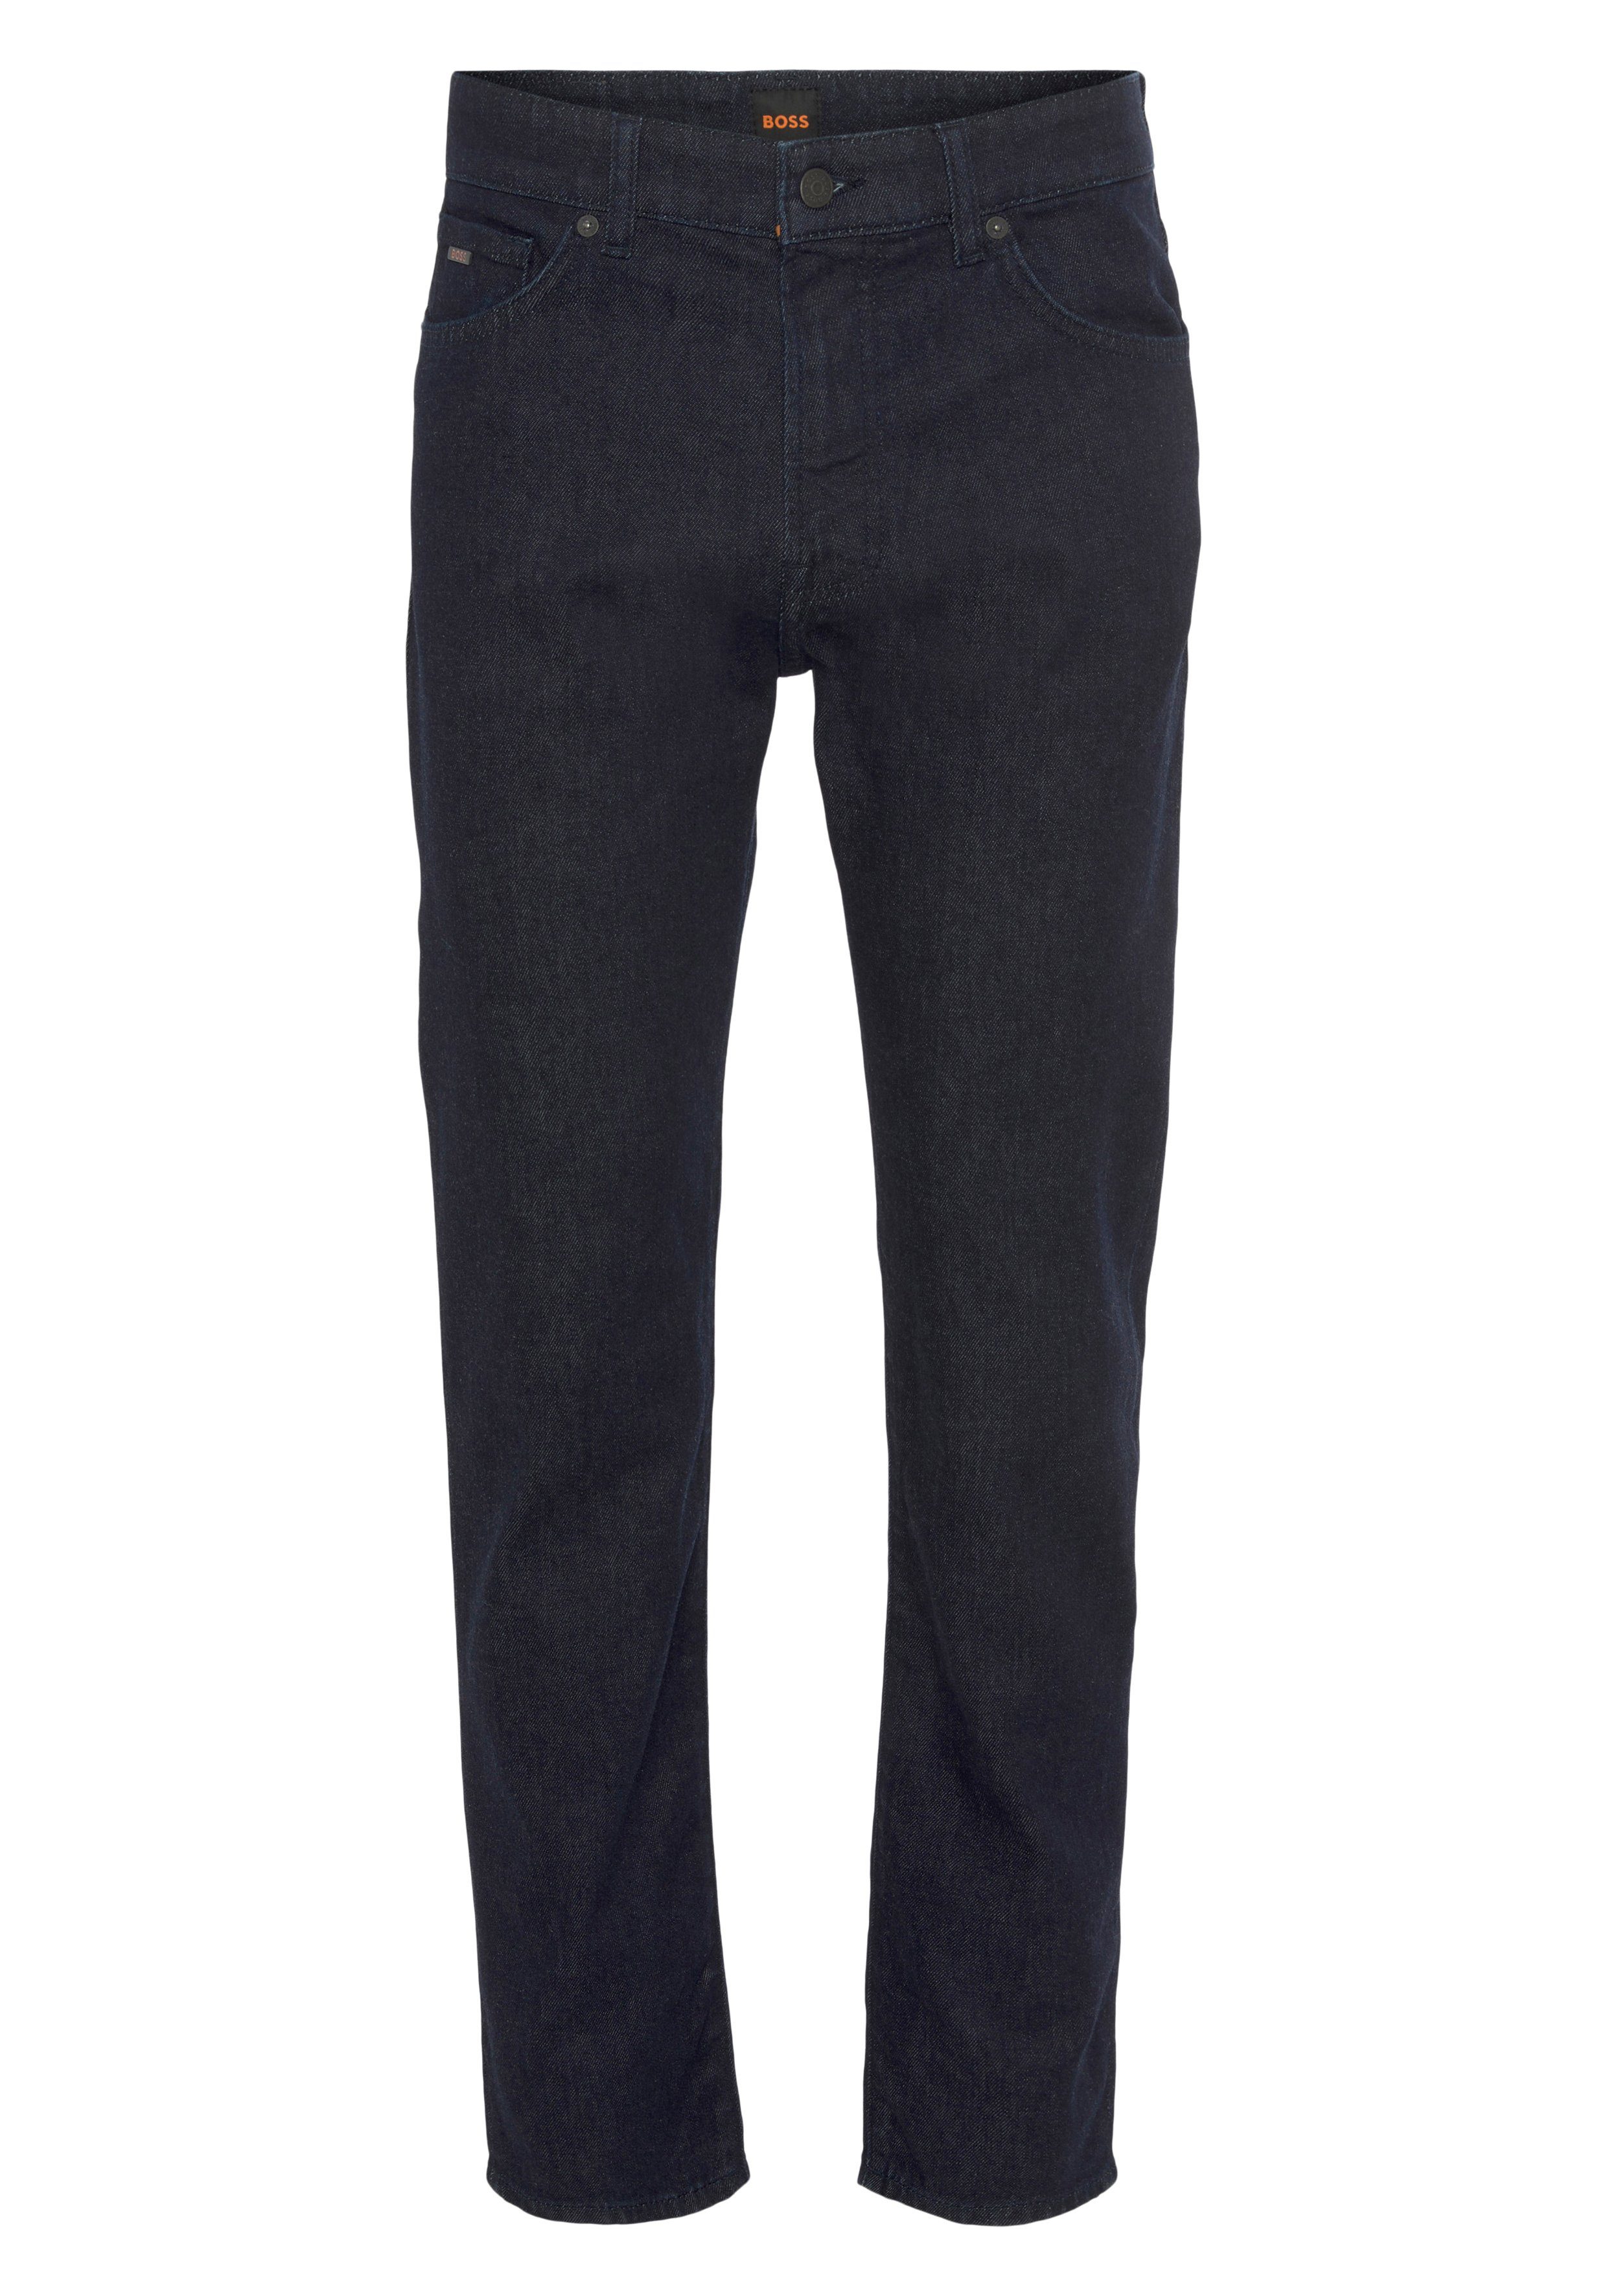 Boss Orange 5-pocket jeans Re.Maine BC-C in five-pocketsmodel